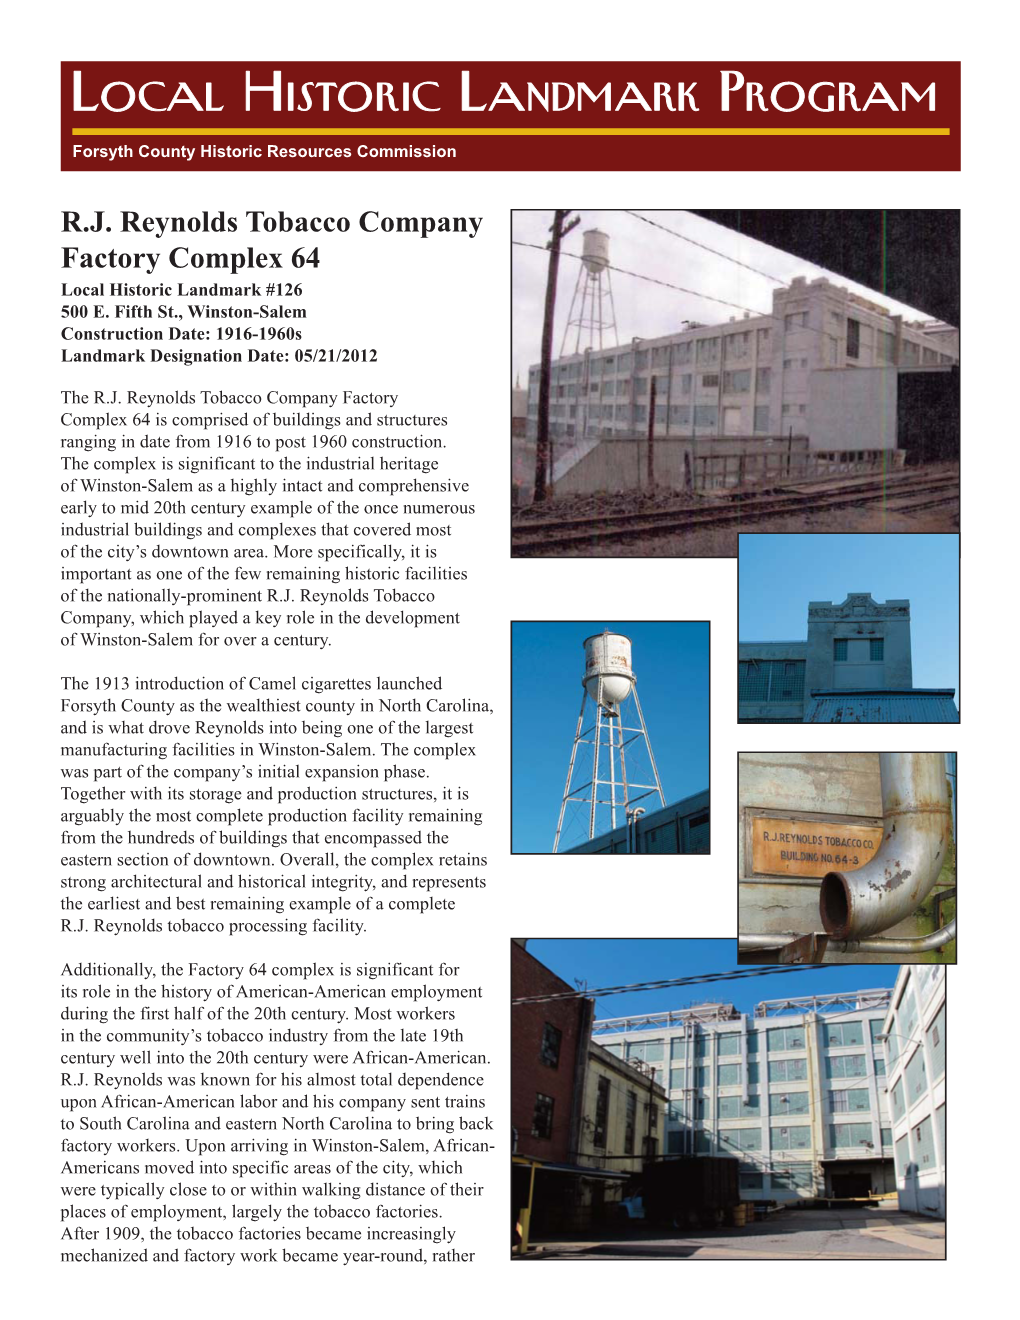 RJ Reynolds Tobacco Company Factory Complex 64